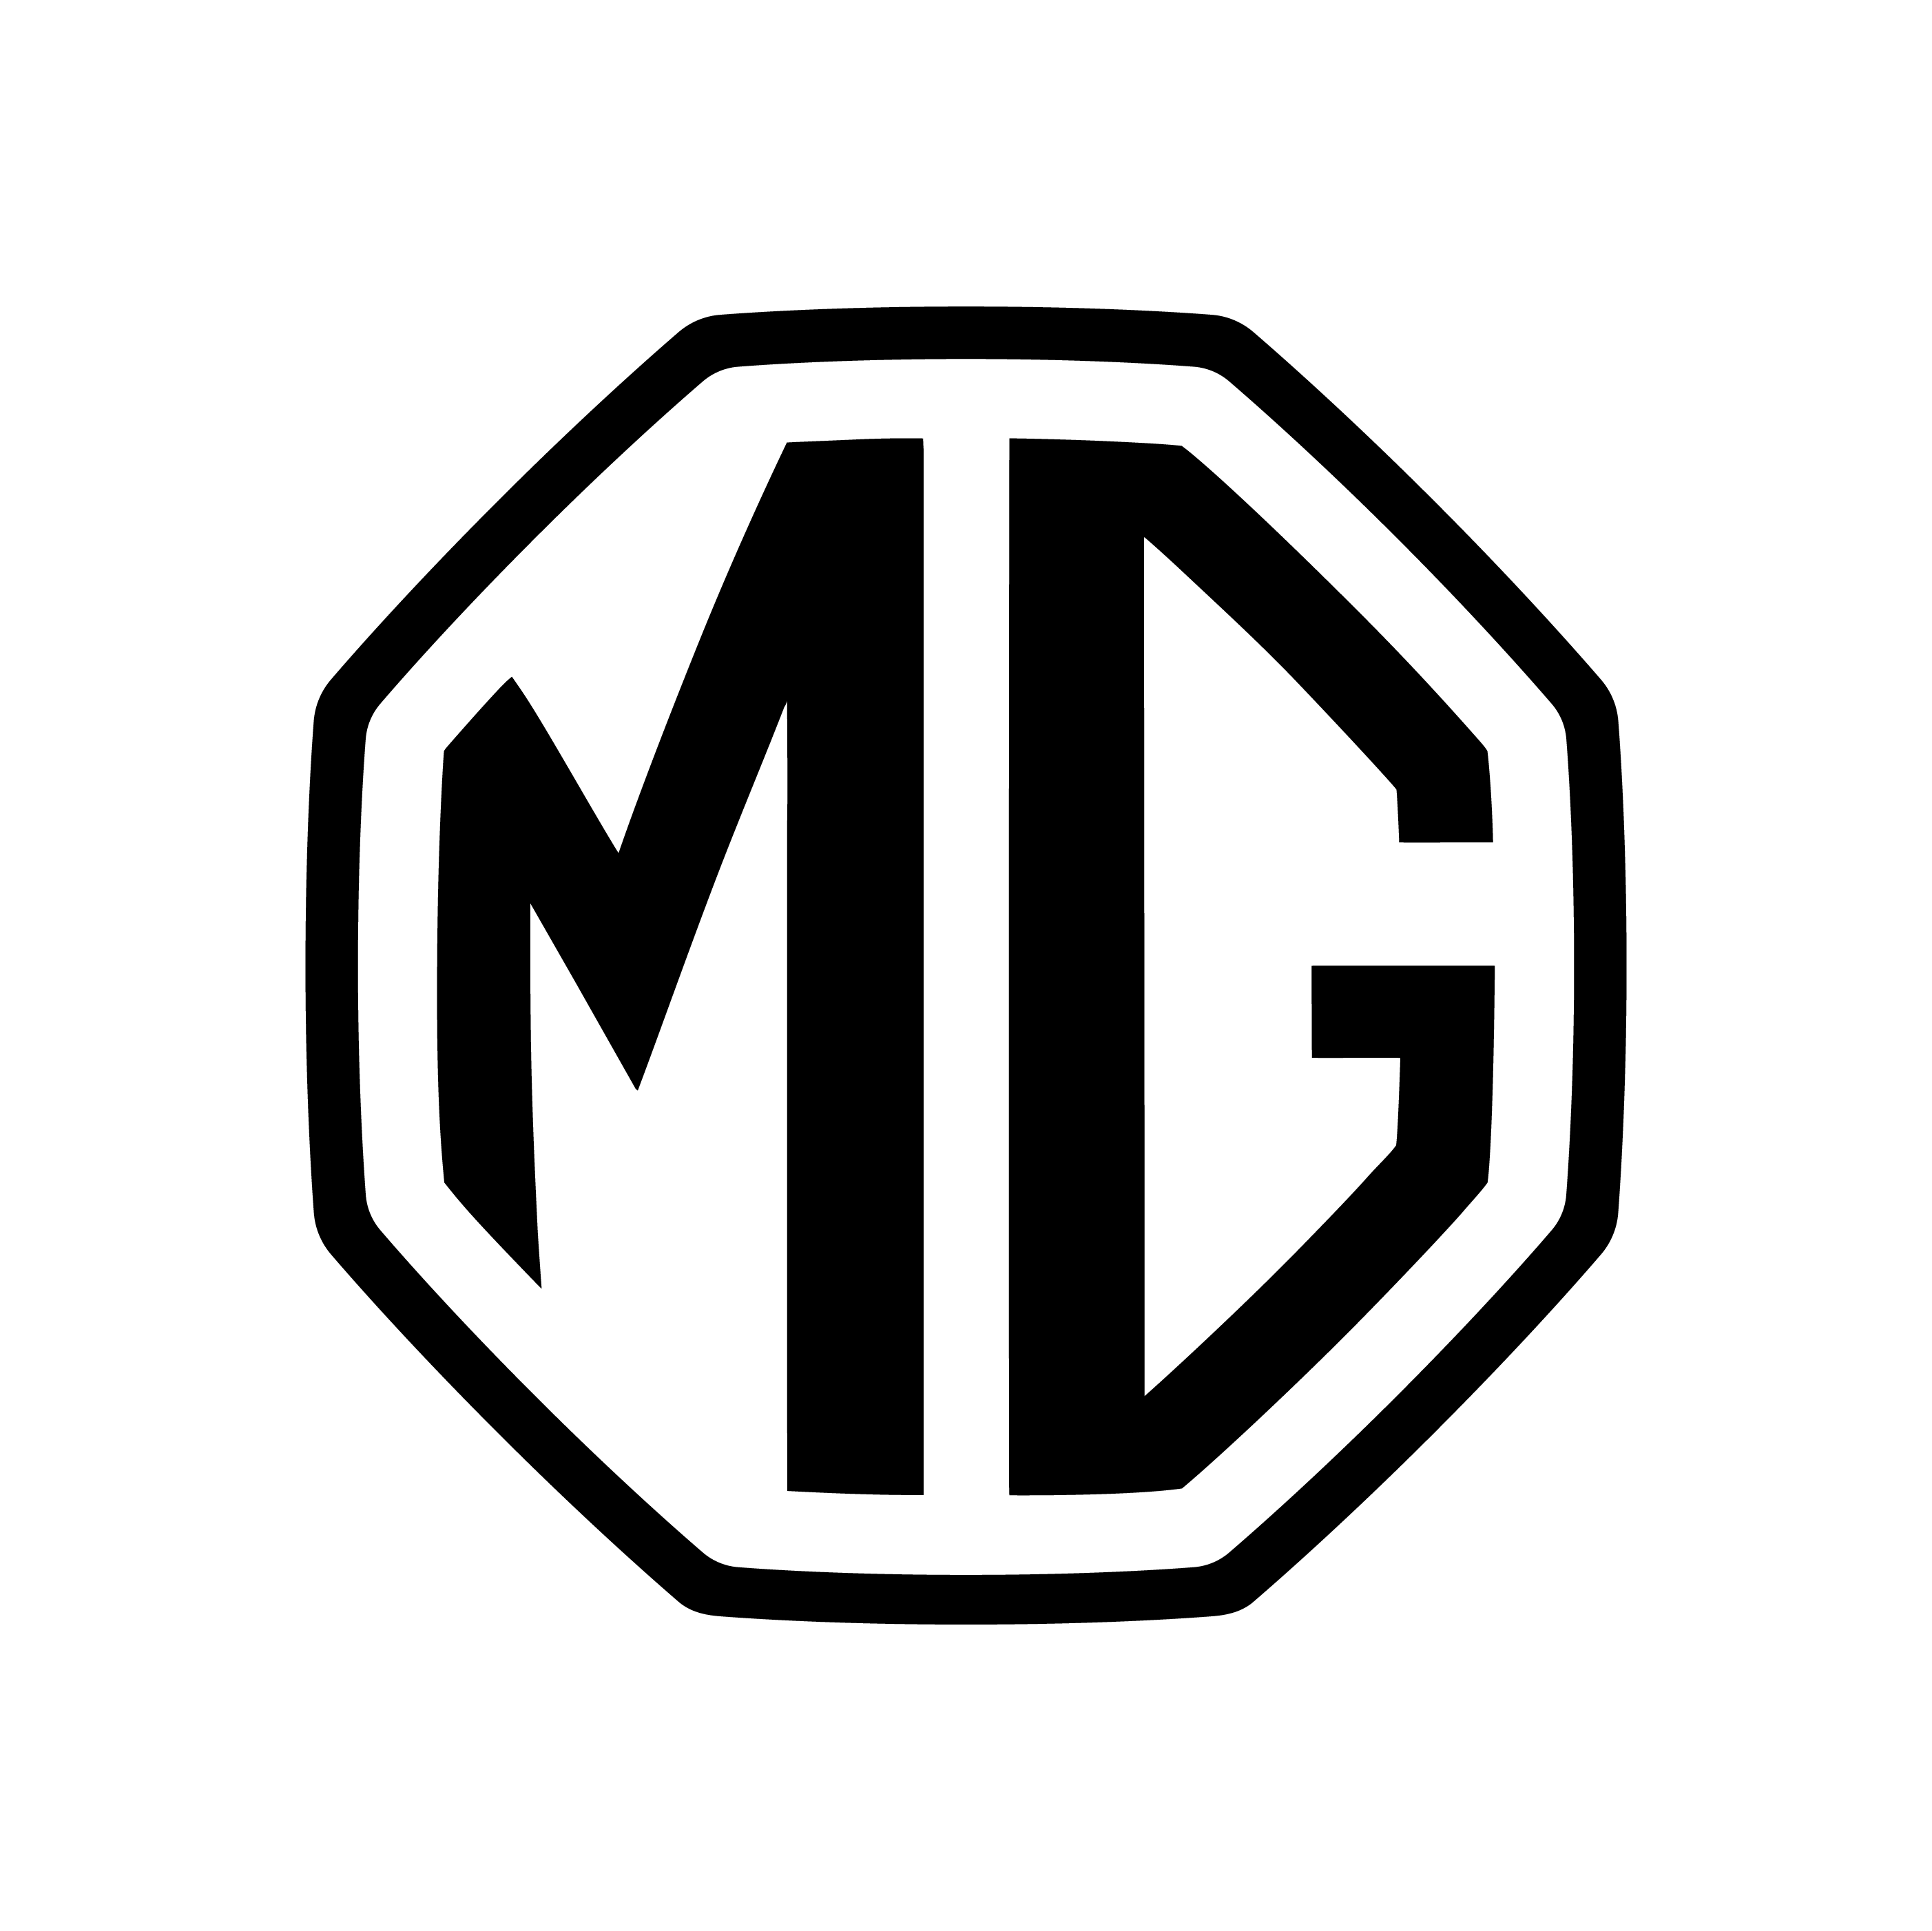 MG Logo Black